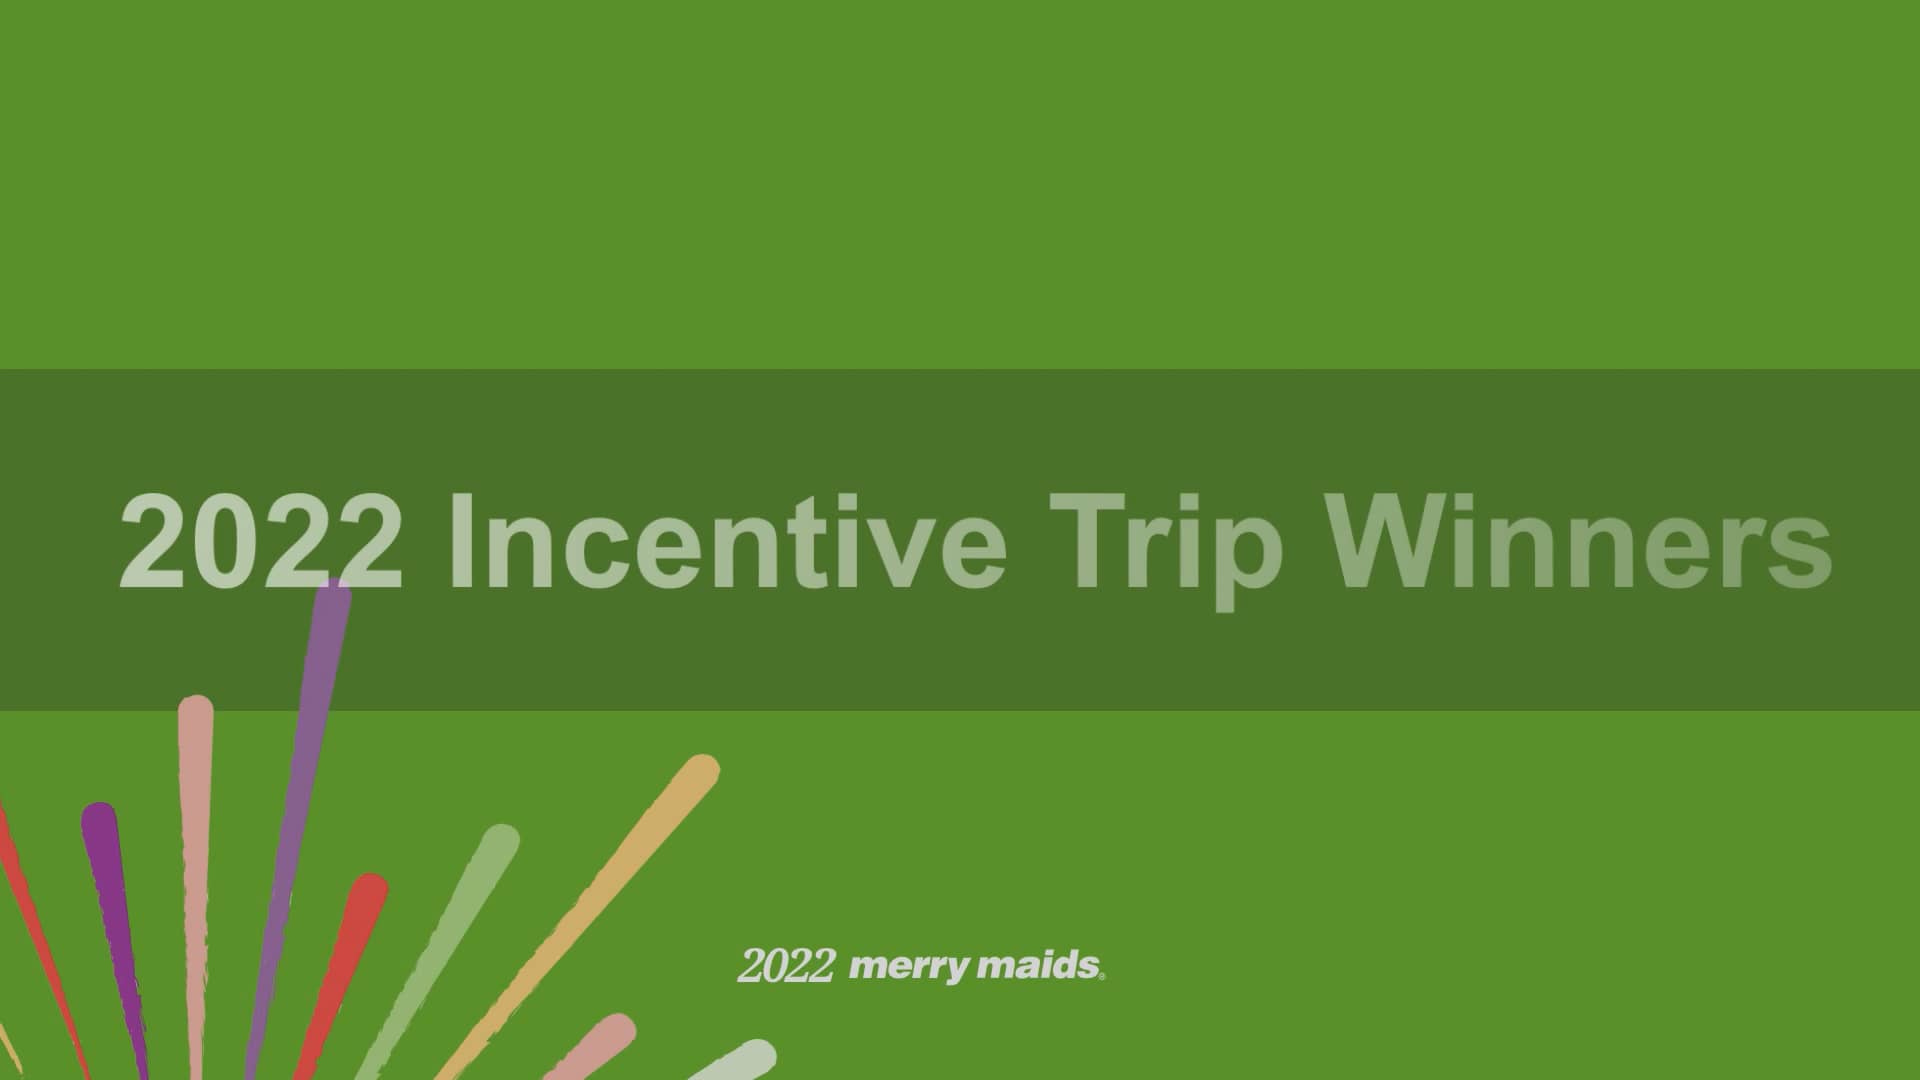 2022 Incentive Trip Winners on Vimeo